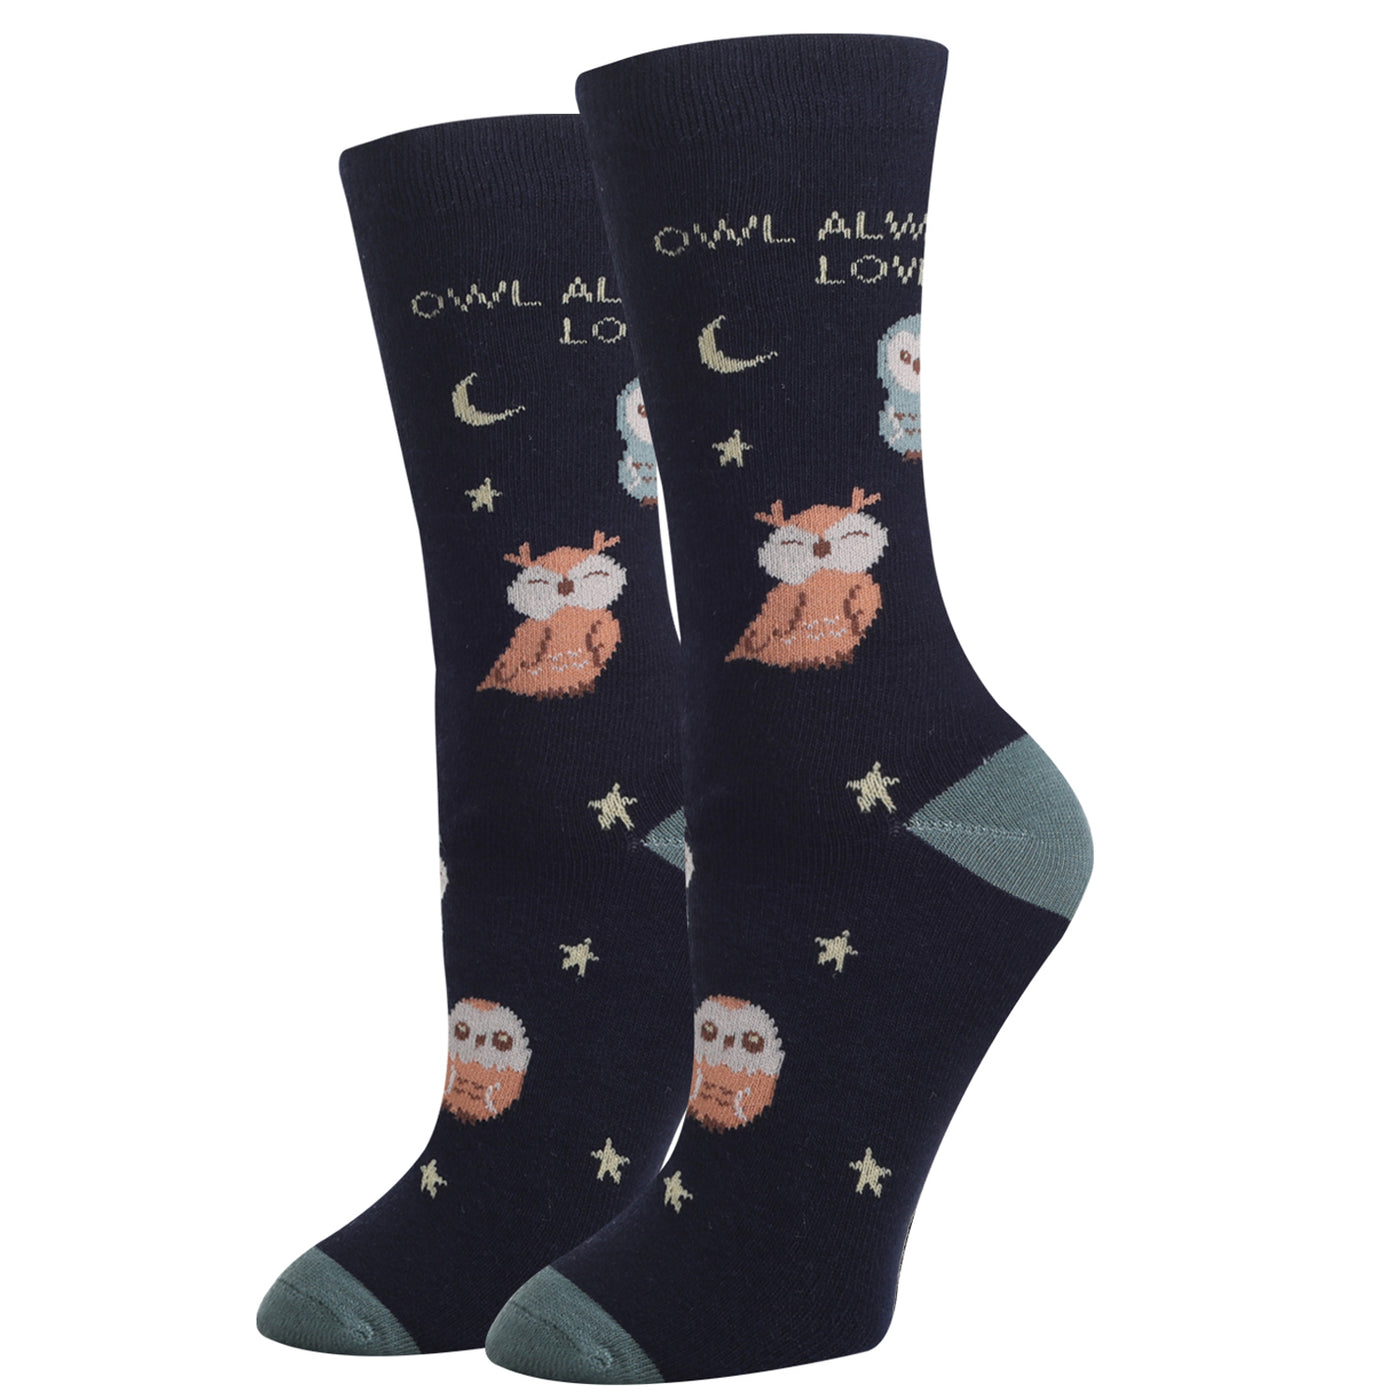 Owl Always Love You Socks